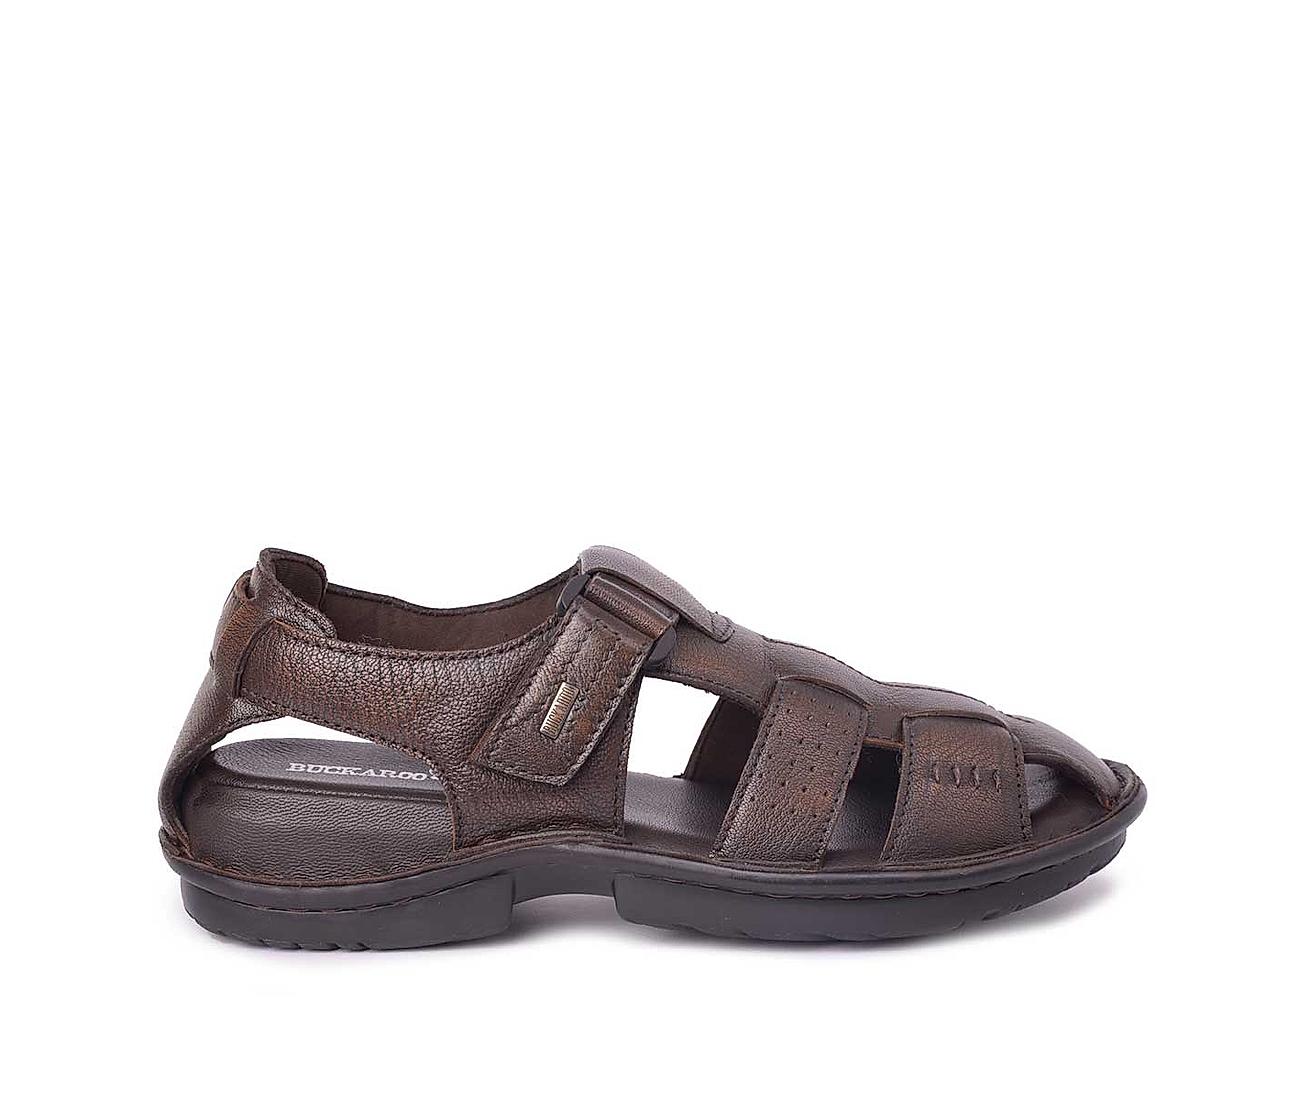 Discover 143+ buckaroo sandals online india latest